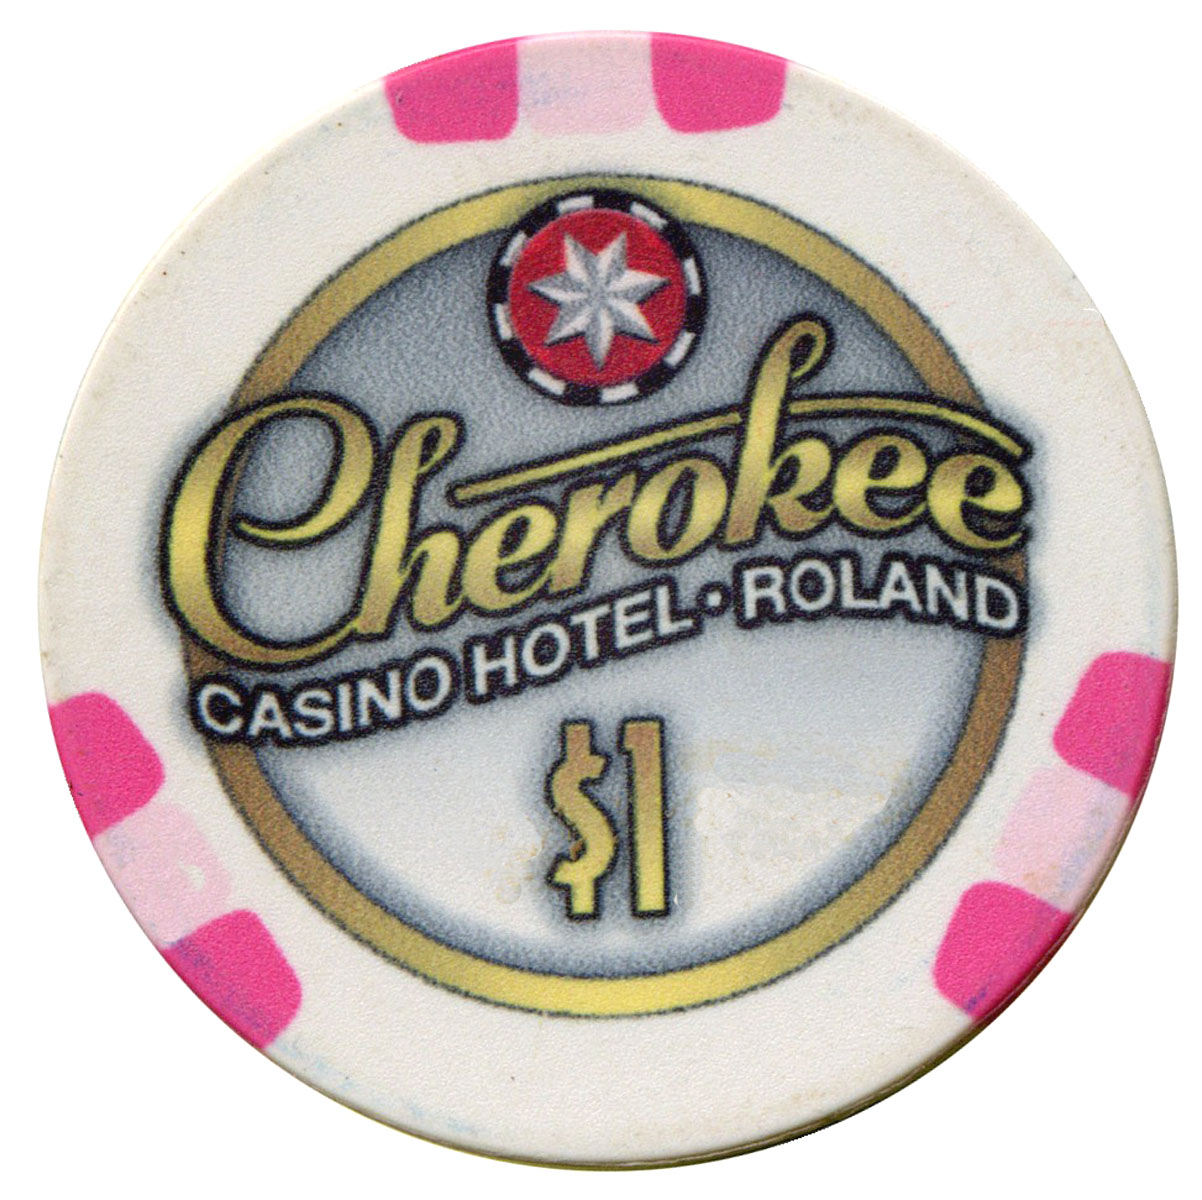 cherokee casino horse racing roland